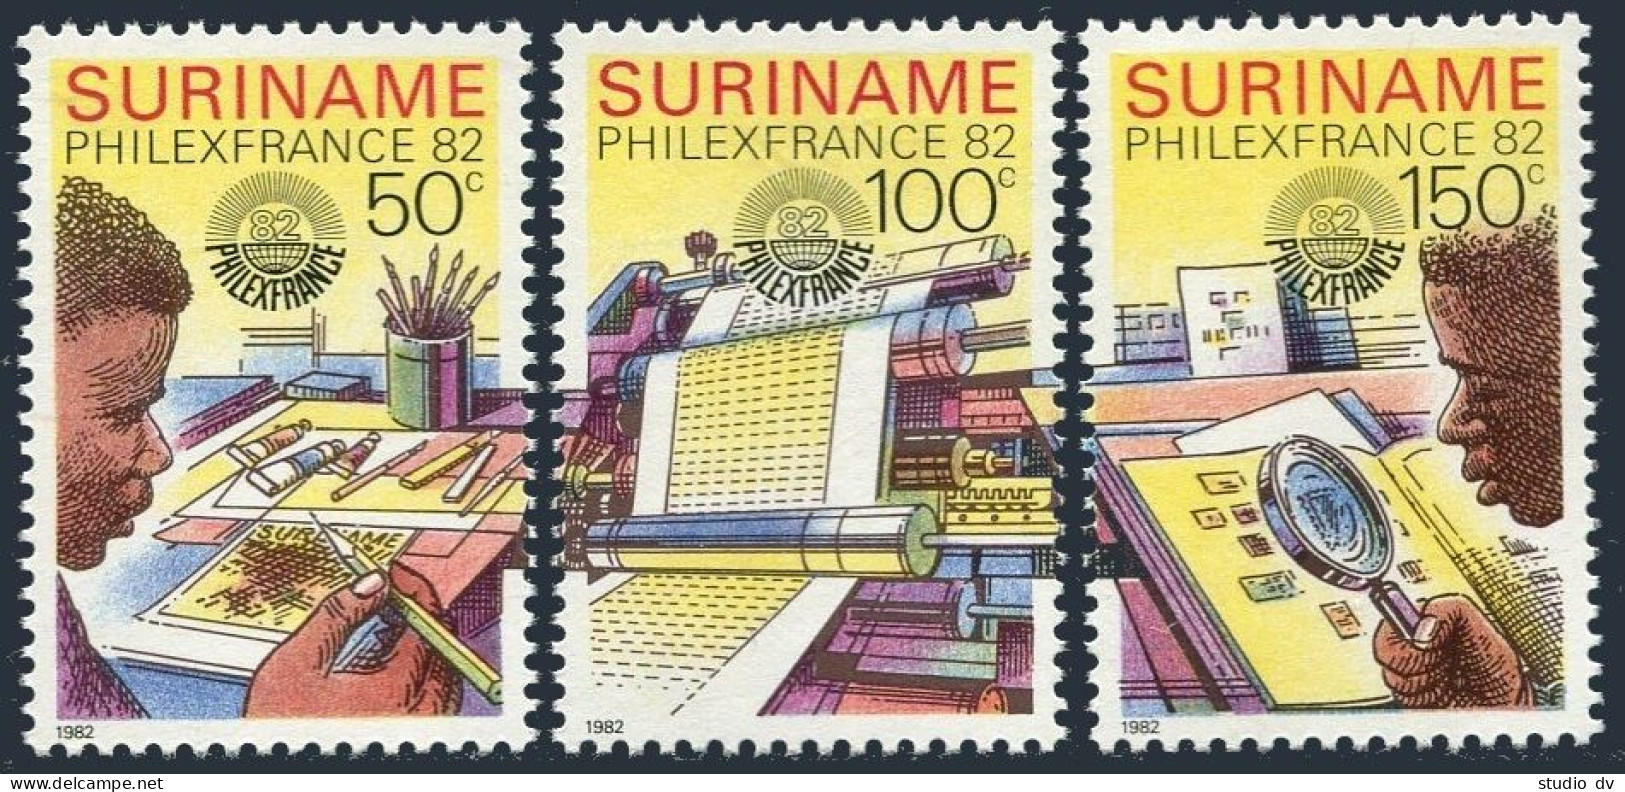 Surinam 600-602, MNH. Mi 987-989. PHILEXFRANCE-1982. Stamps Designing, Printing, - Surinam